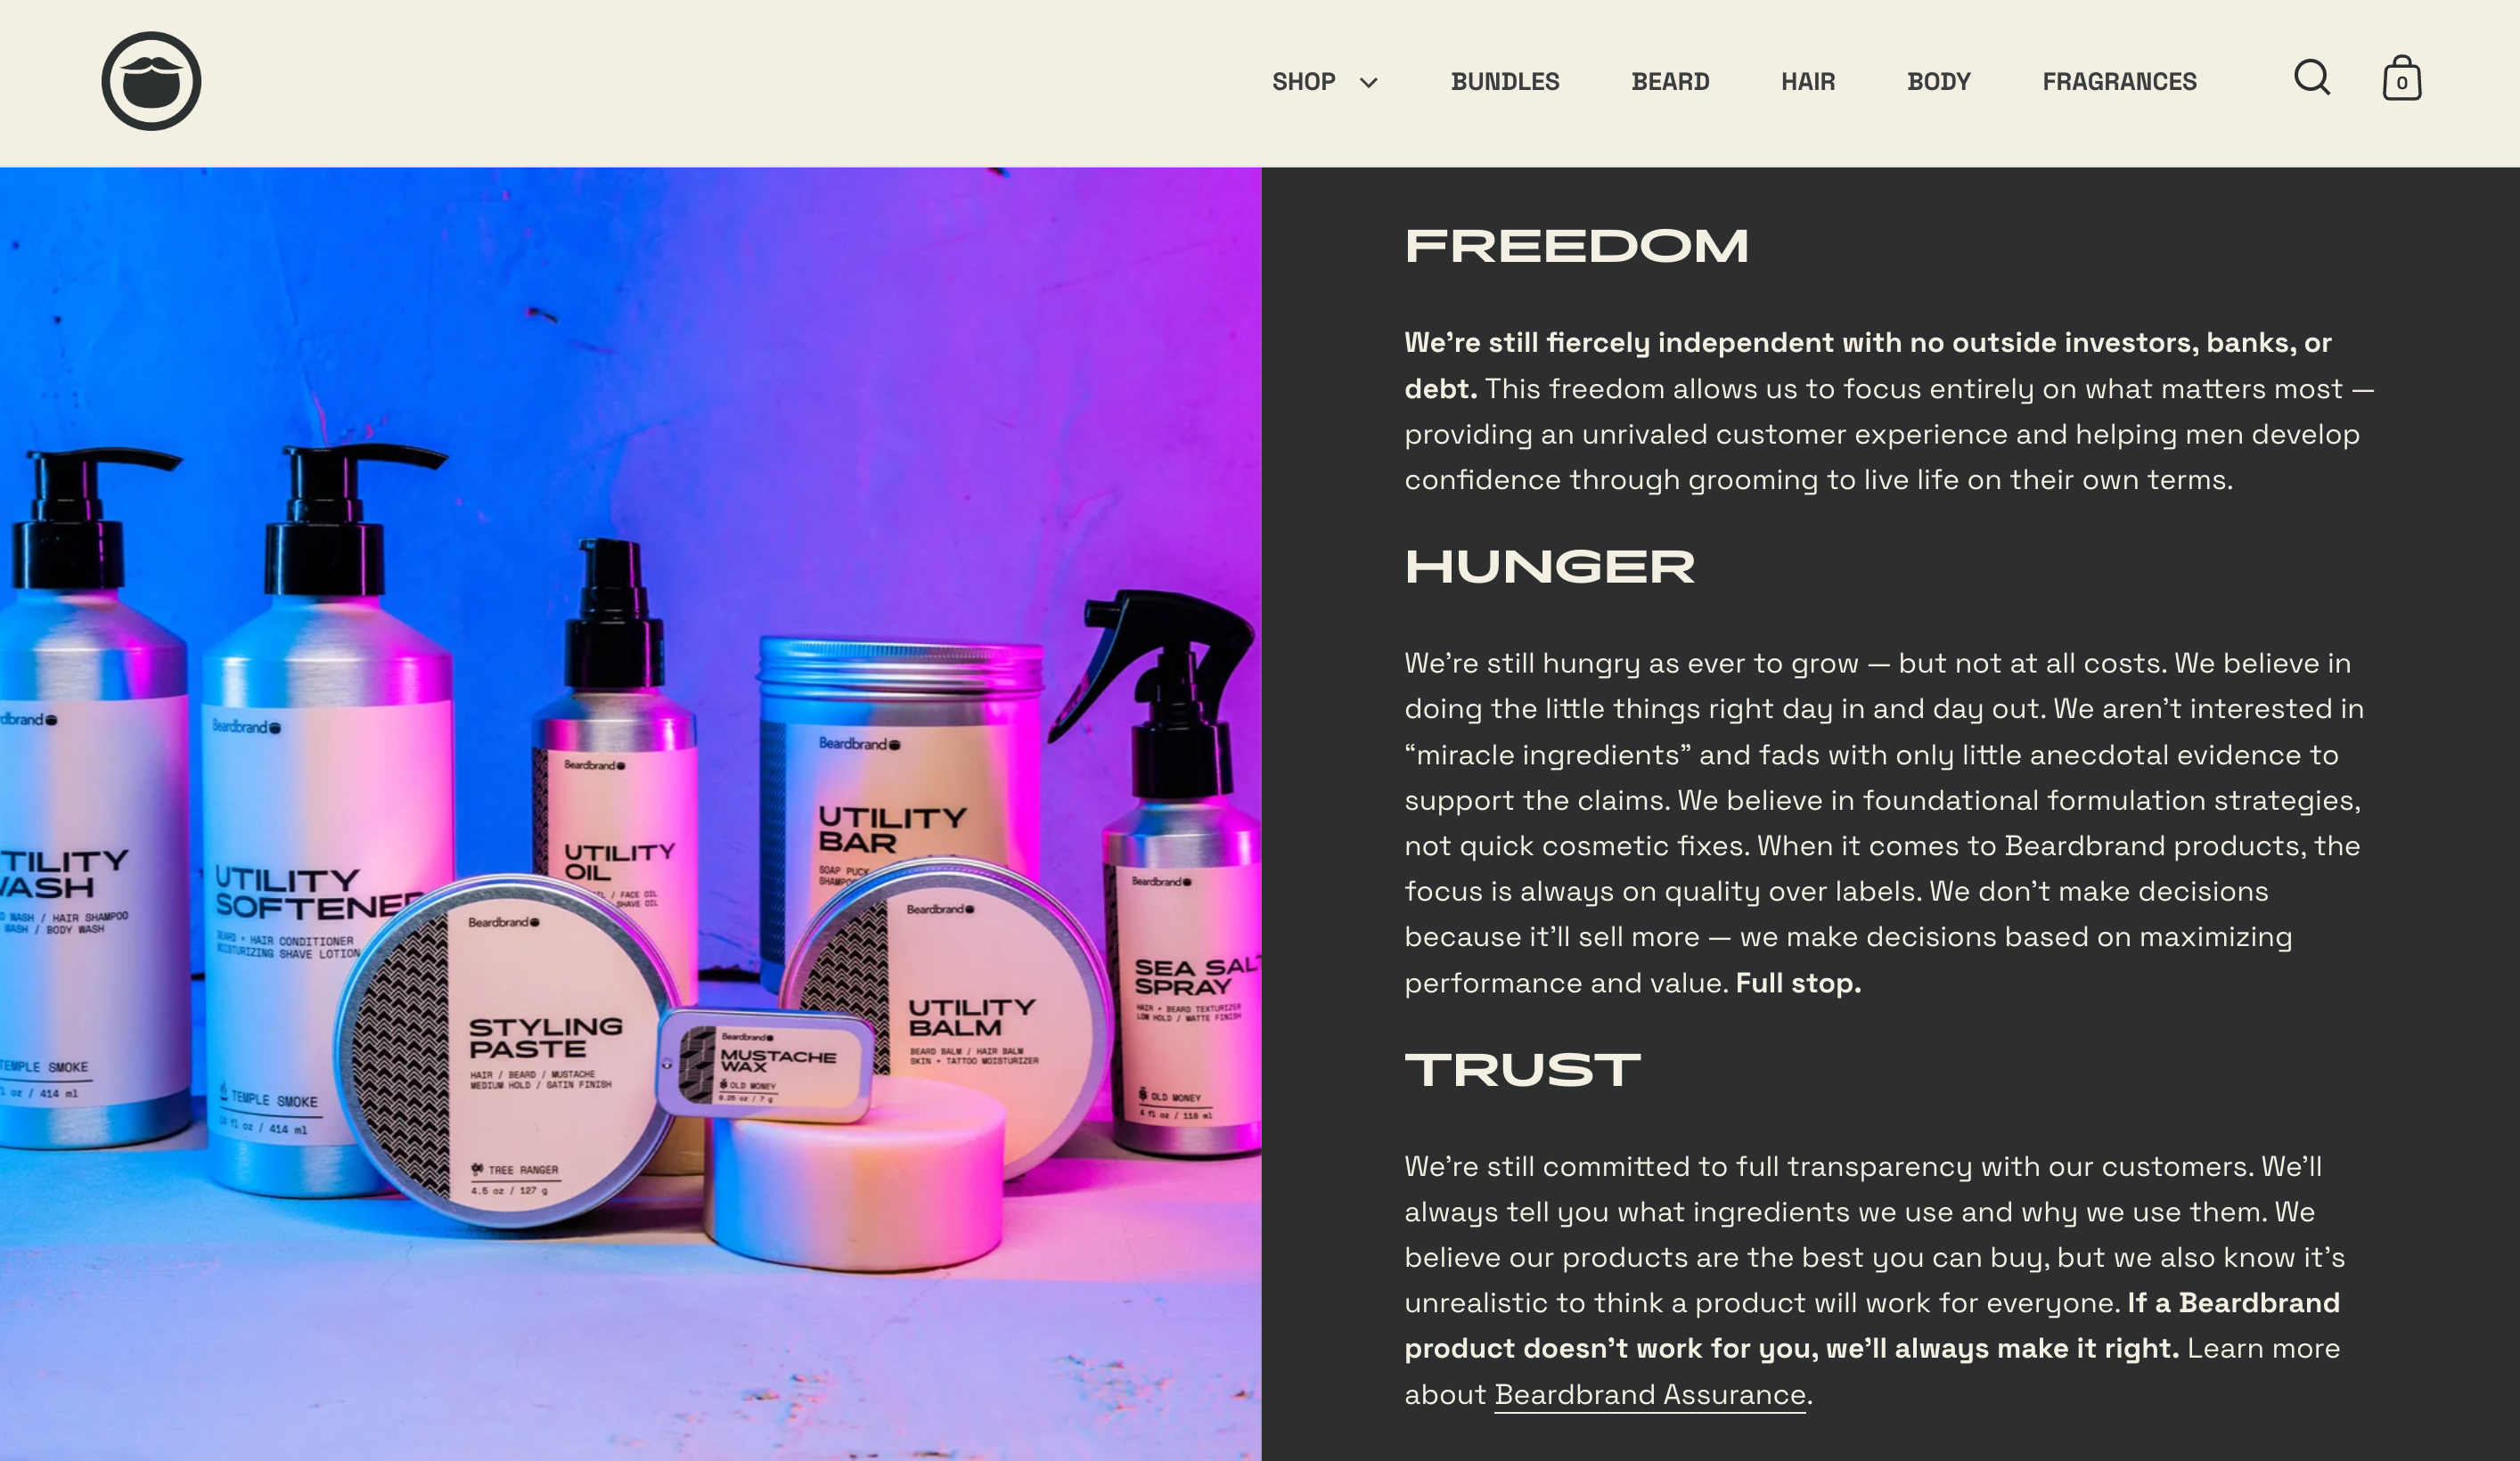 Screen grab of homepage on the Beardbrand ecommerce website